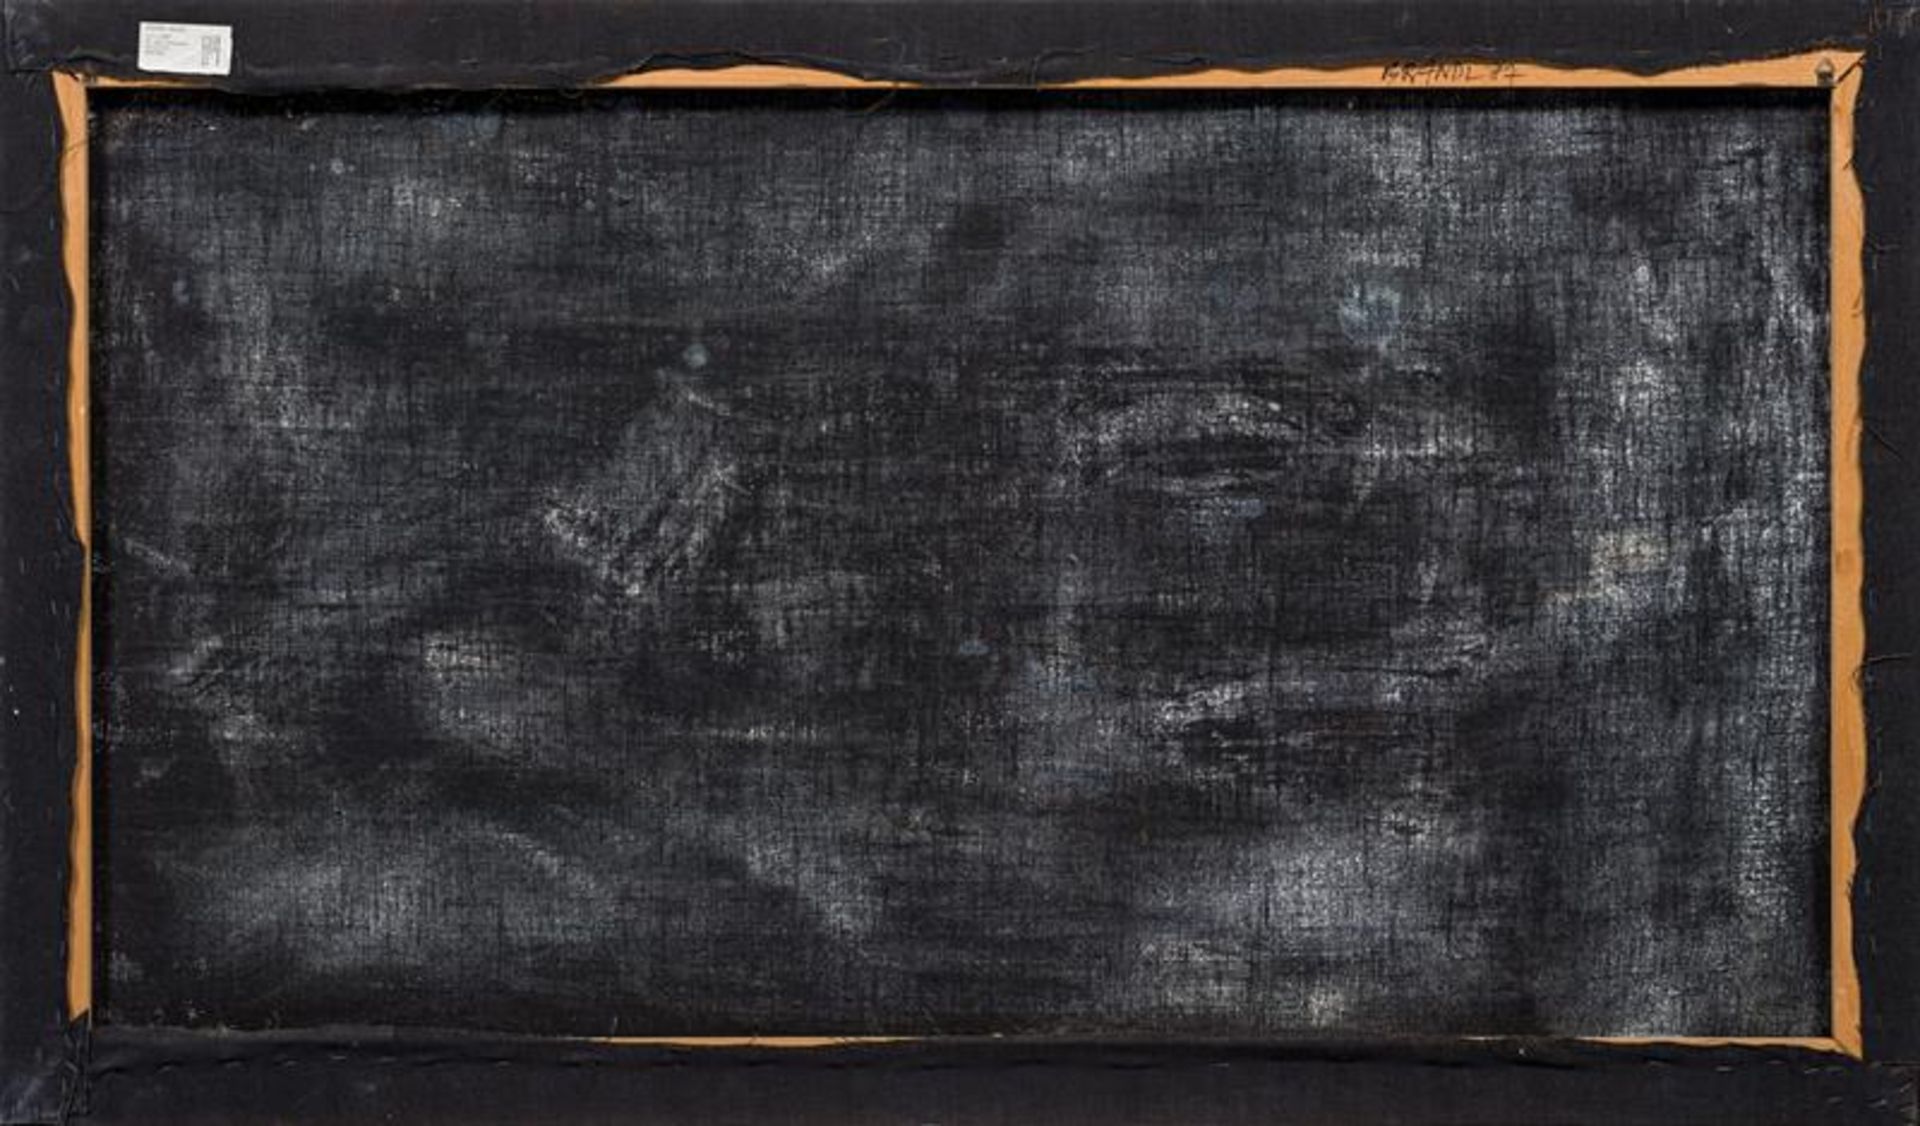 Herbert Brandl: Untitled (Diptychon) - Image 2 of 2